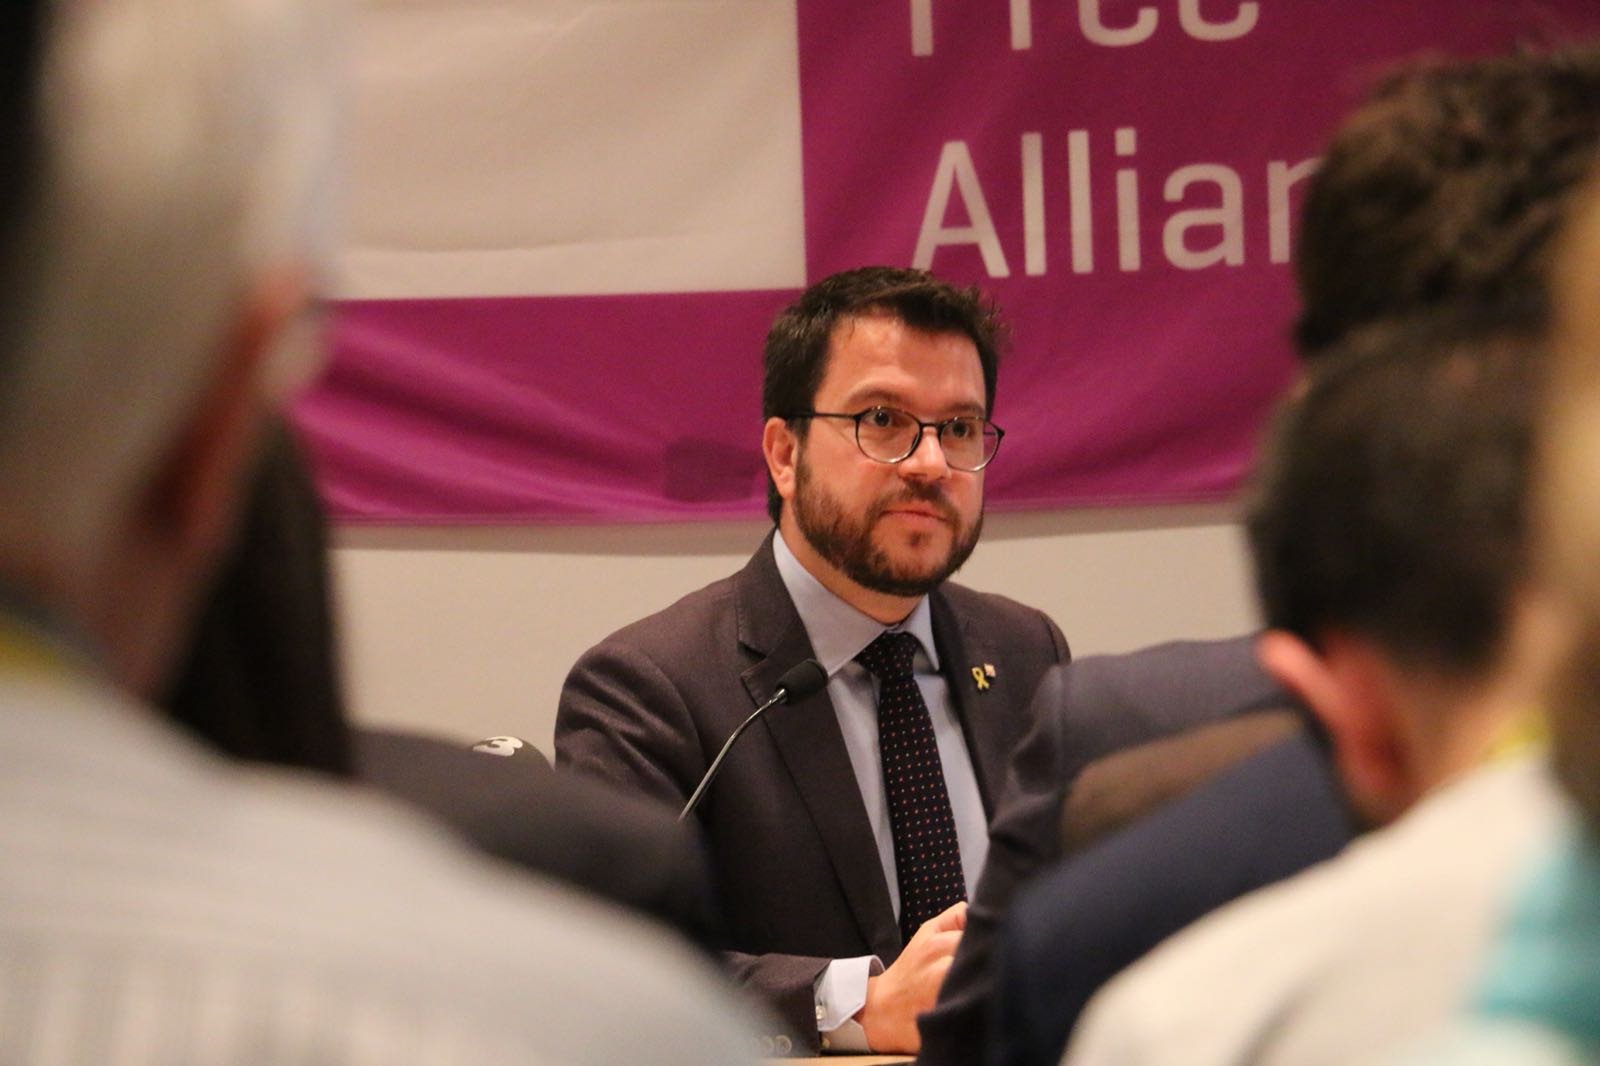 Aragonès, en Escocia: "Lucharemos por un referéndum vinculante aceptado internacionalmente"